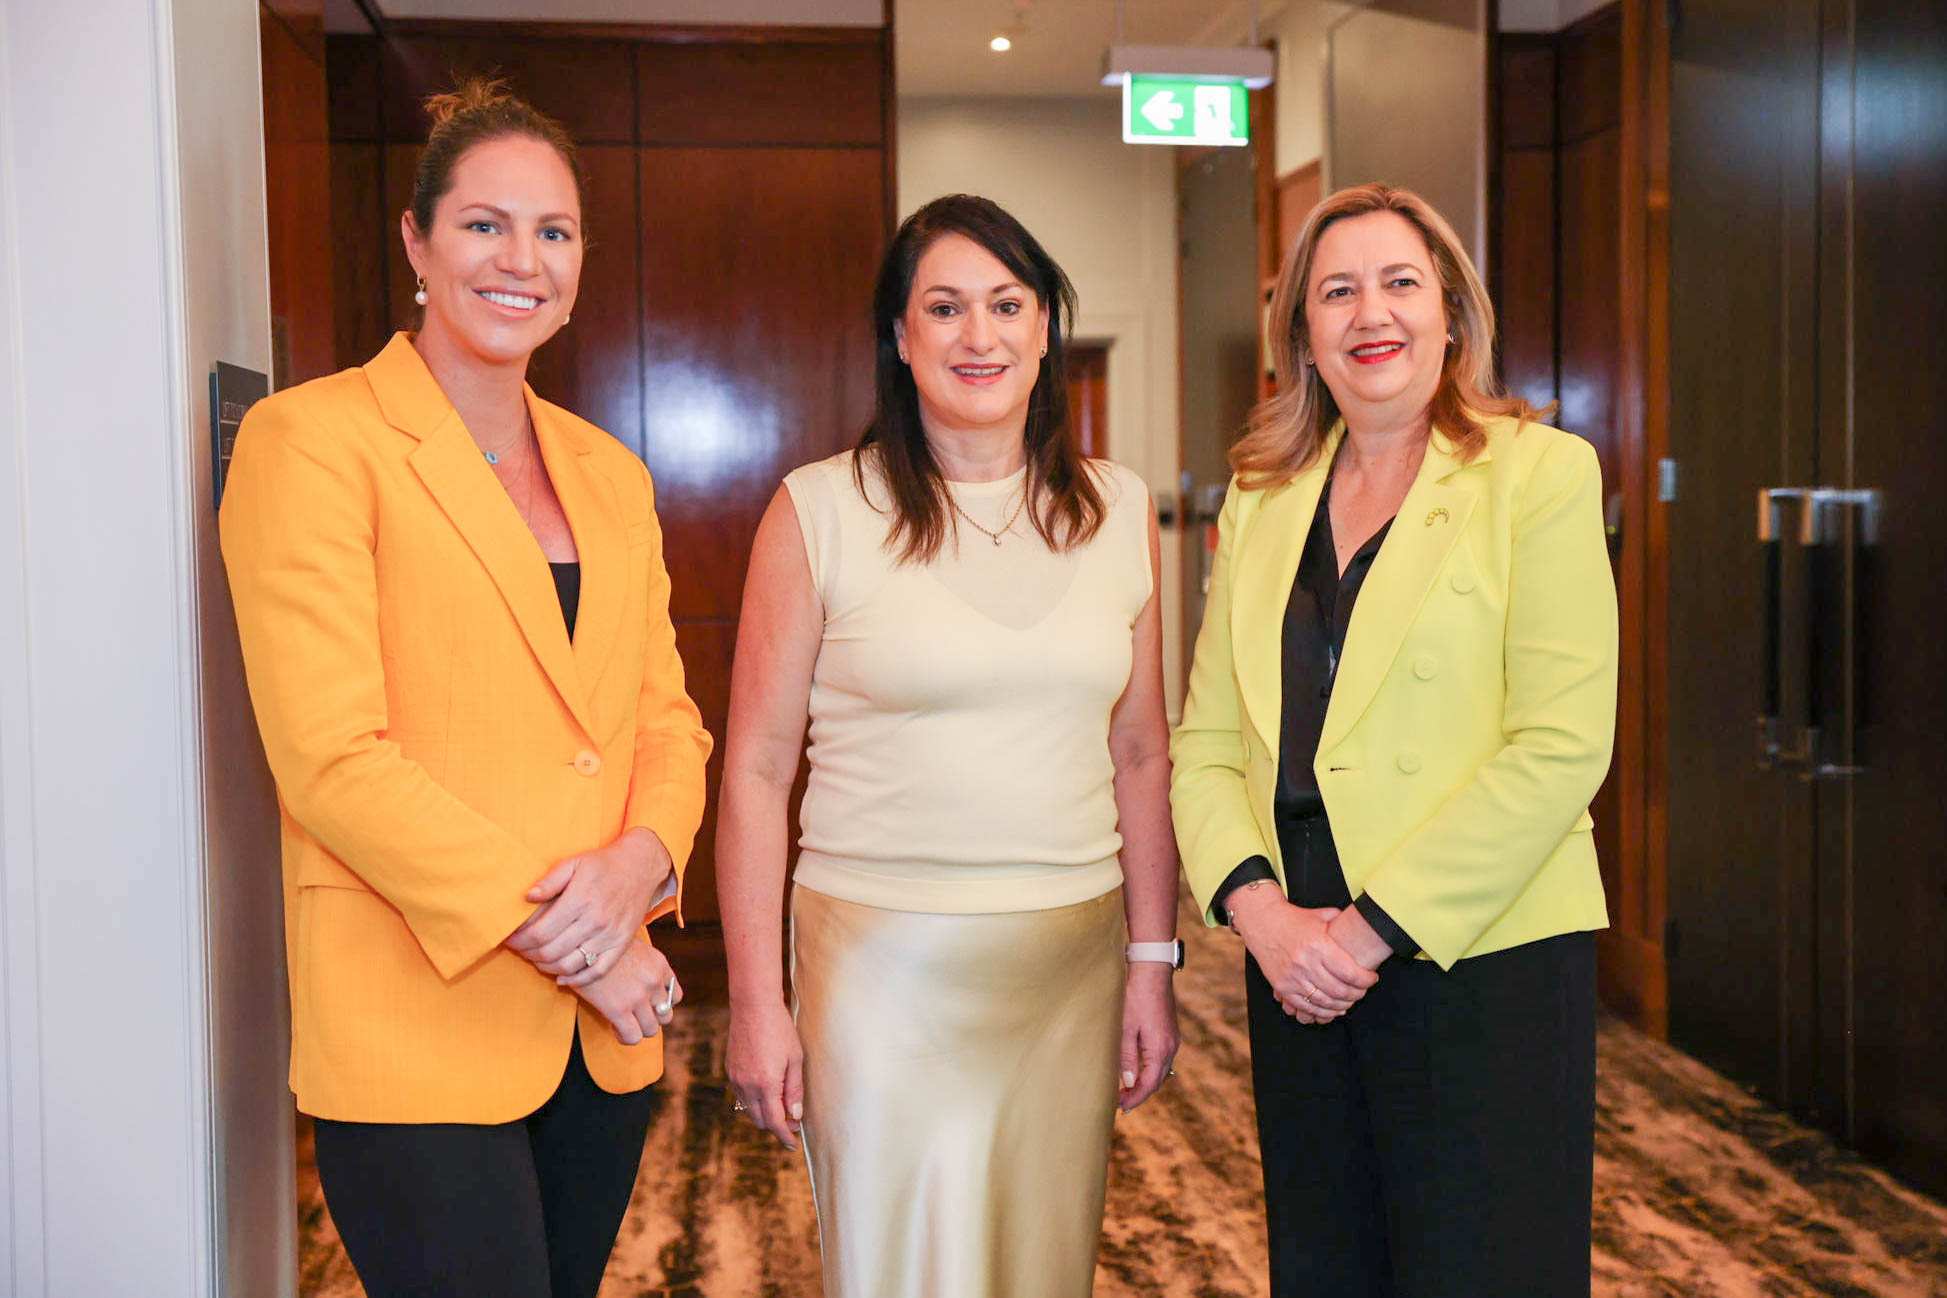 Endometriosis Australia Welcomes Queensland Health Funding